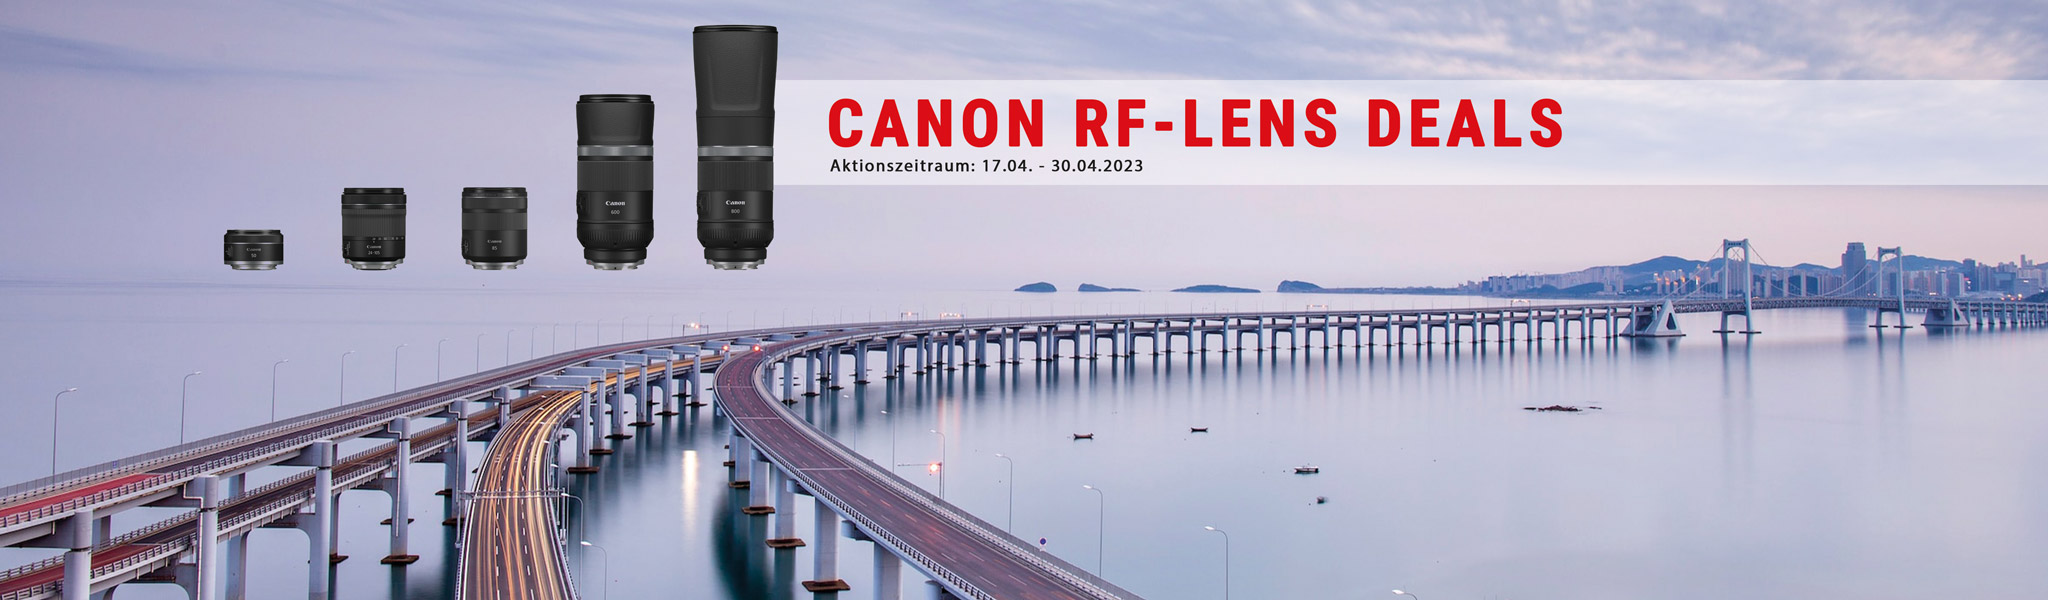 Canon RF-Lens Deals bei Fotomax in Nürnberg und Berlin